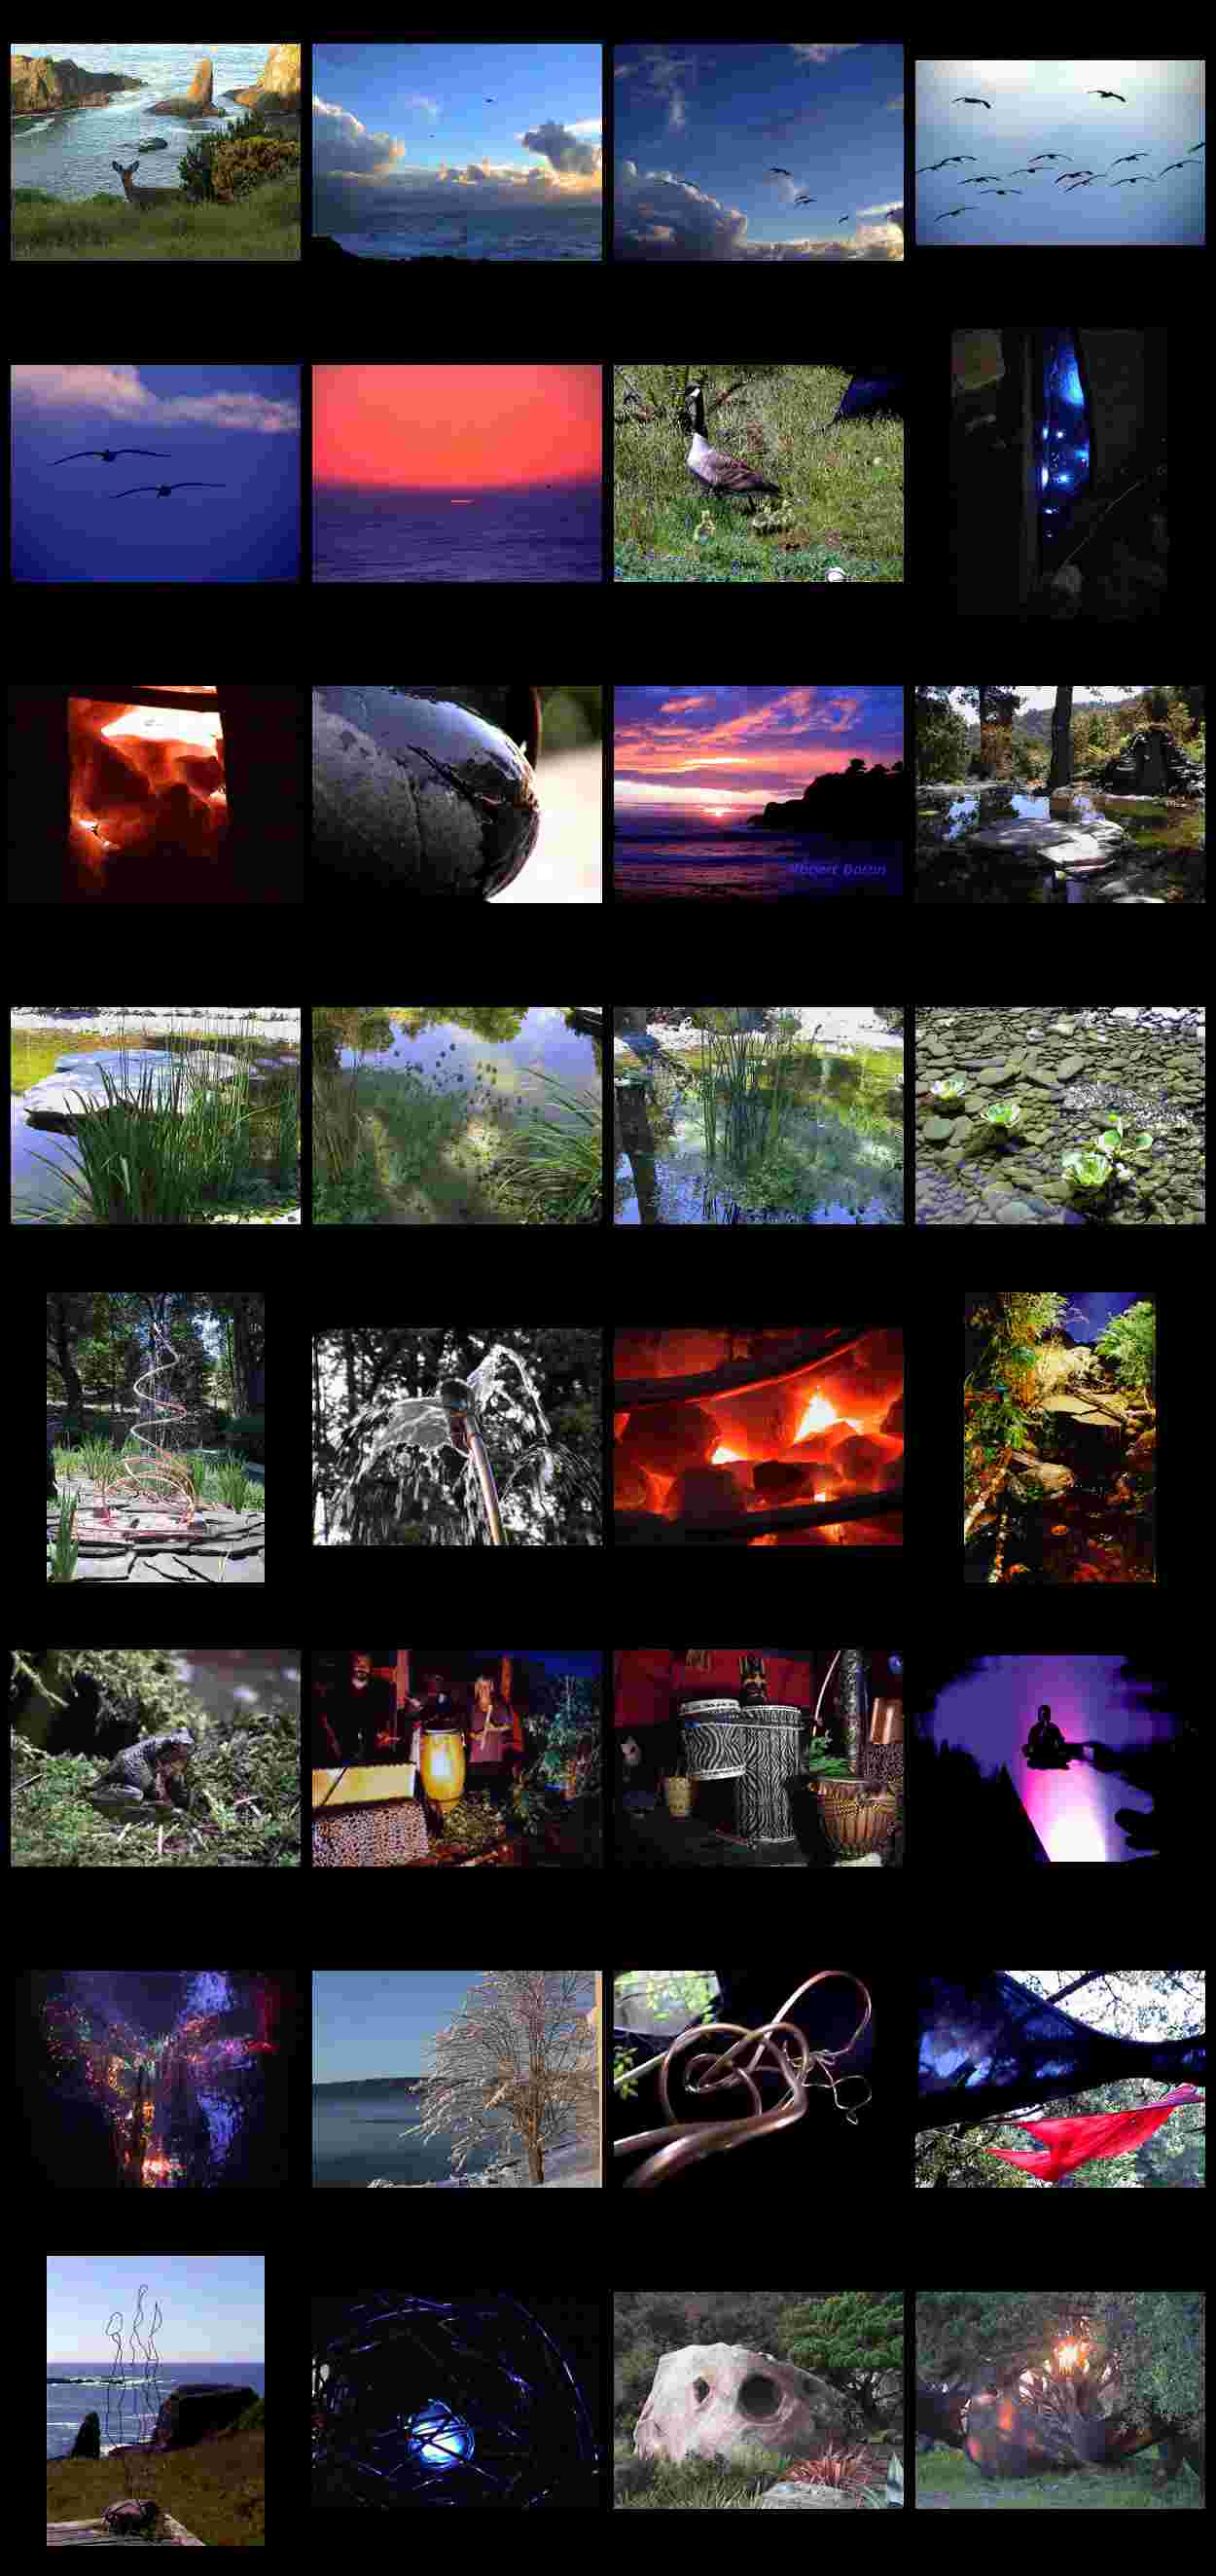 Web Site Photos Sampler (photo enlargement) - click to return